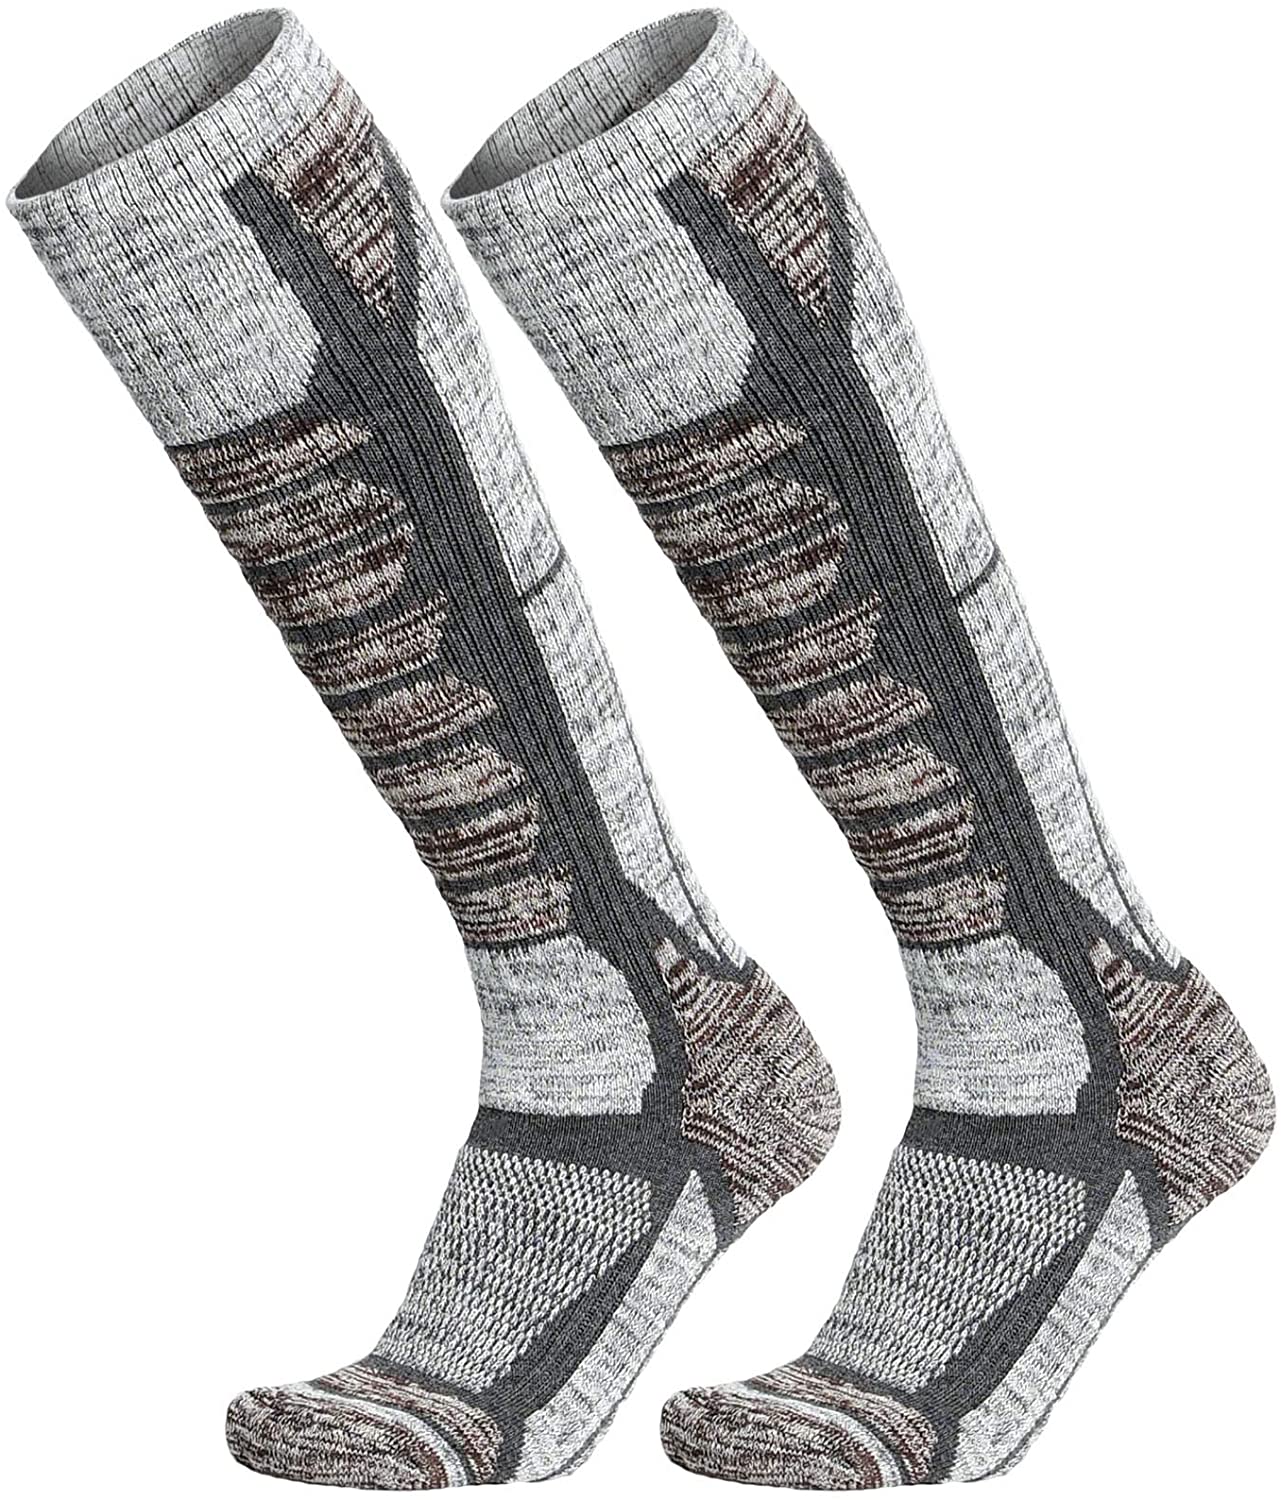 WEIERYA Ski Socks 2 Pairs Pack for Skiing, Snowboarding, Cold Weather,  Winter Pe